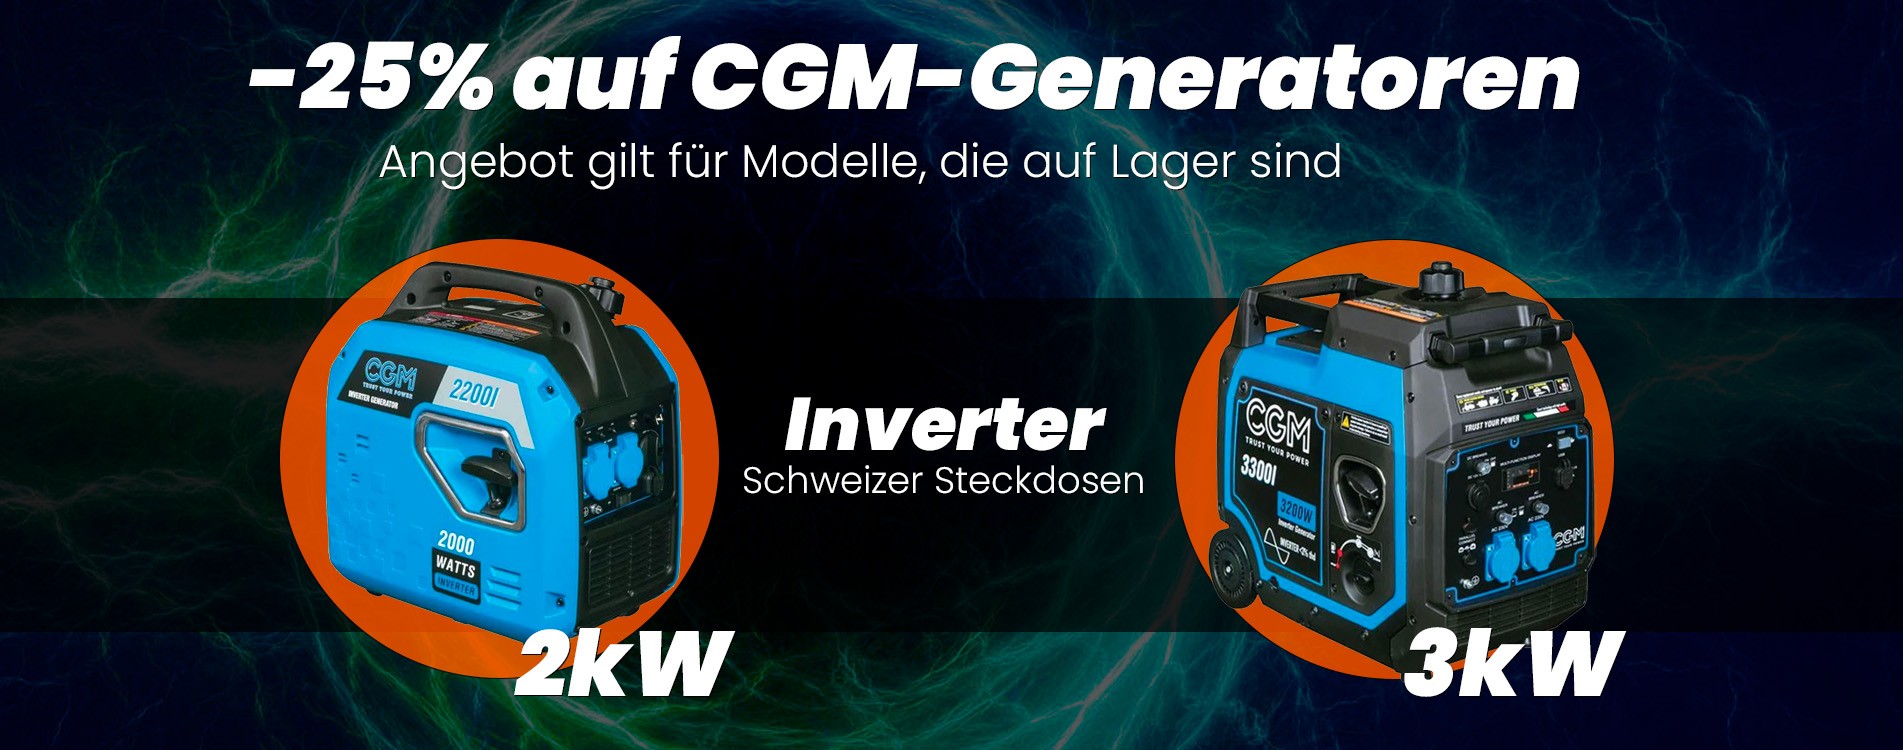 Generator CGM